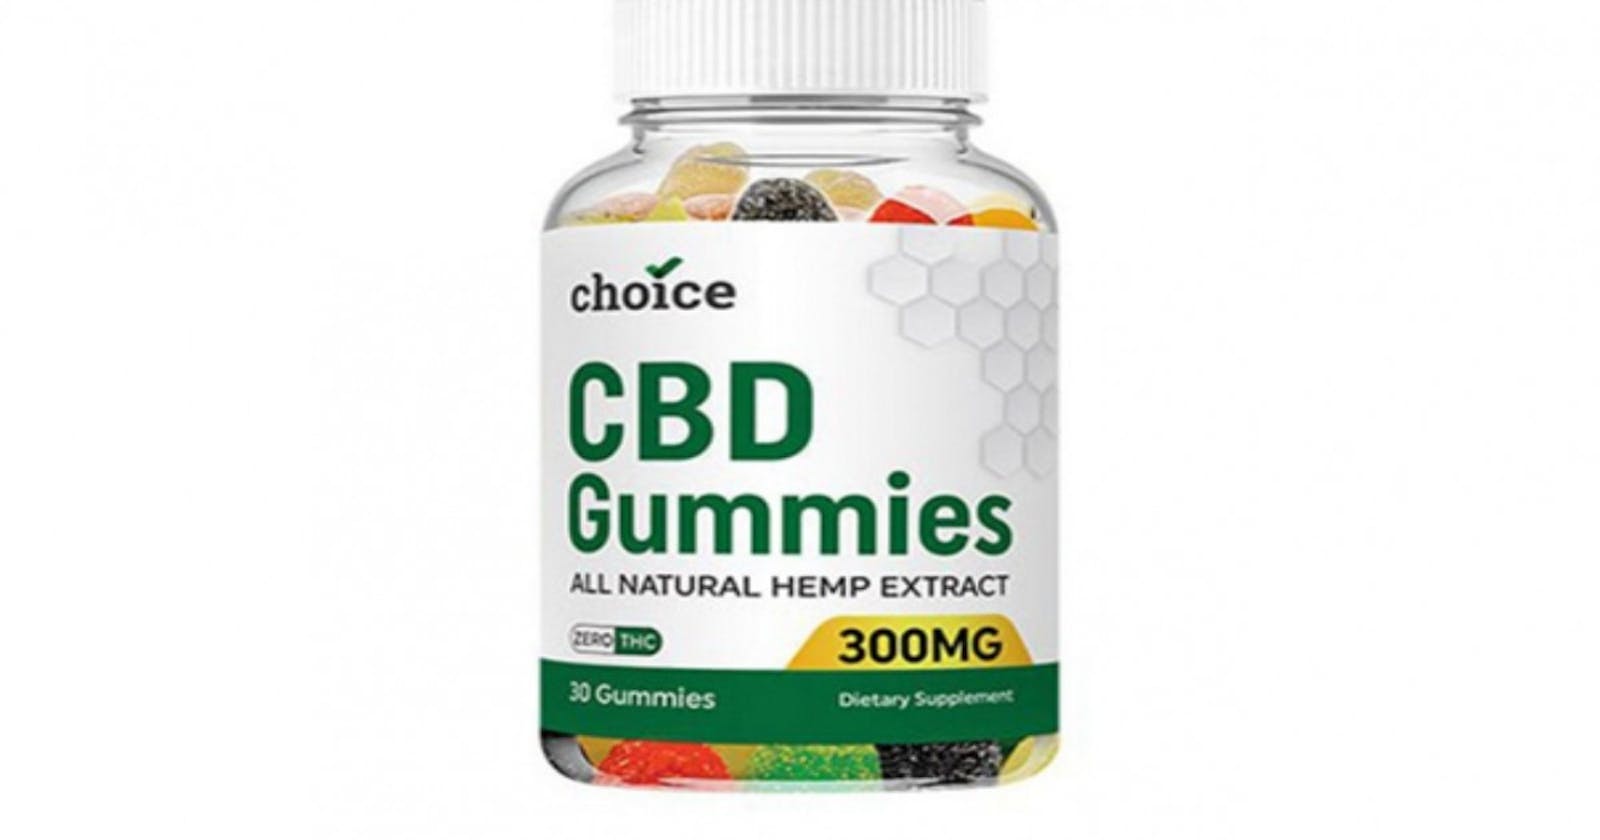 Choice CBD Gummies Reviews (USA): Is It Legitimate Or Scammer? Shocking Ingredients?